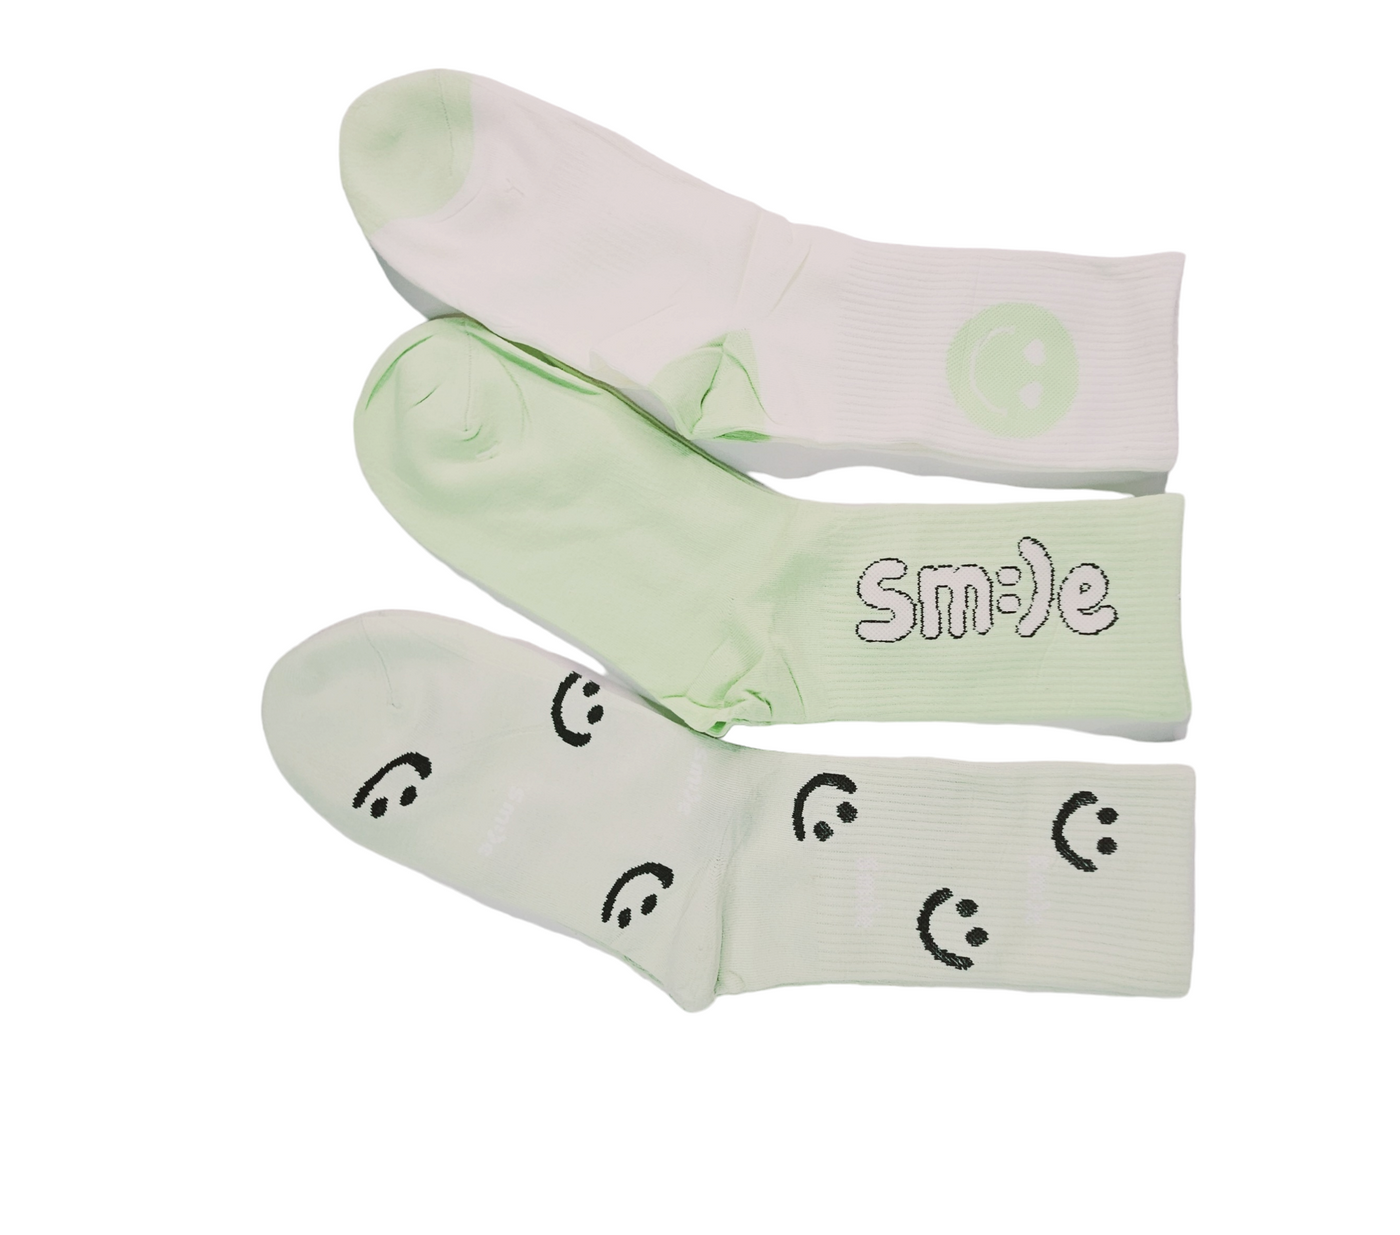 Smiley Green Socks